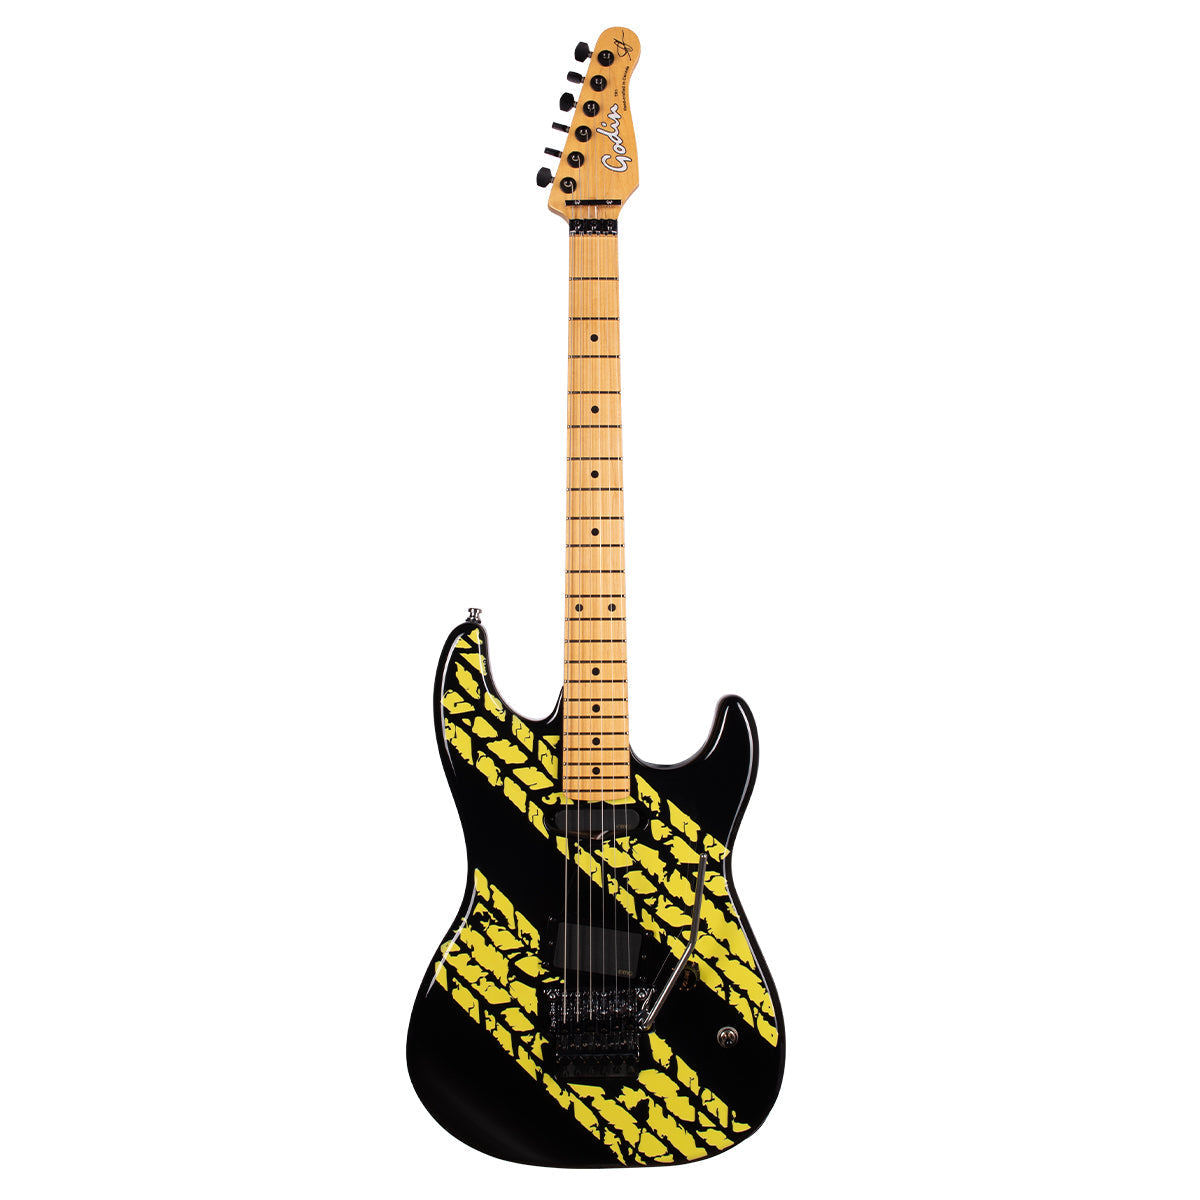 Godin Derry Grehan Signature Electric Guitar ~ Tread 1, Electric Guitar for sale at Richards Guitars.